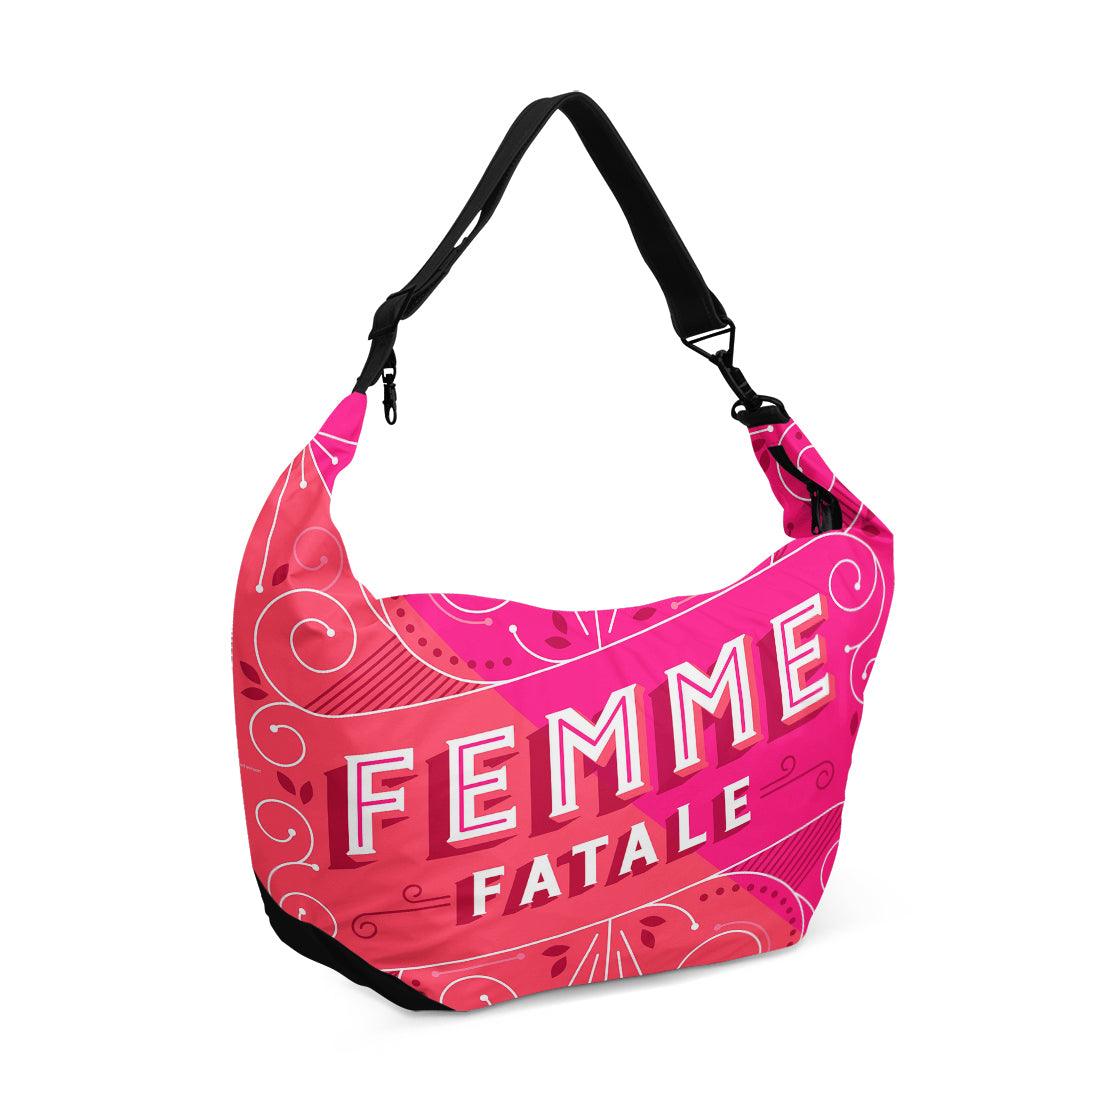 Crescent bag Femme Fatale - CANVAEGYPT